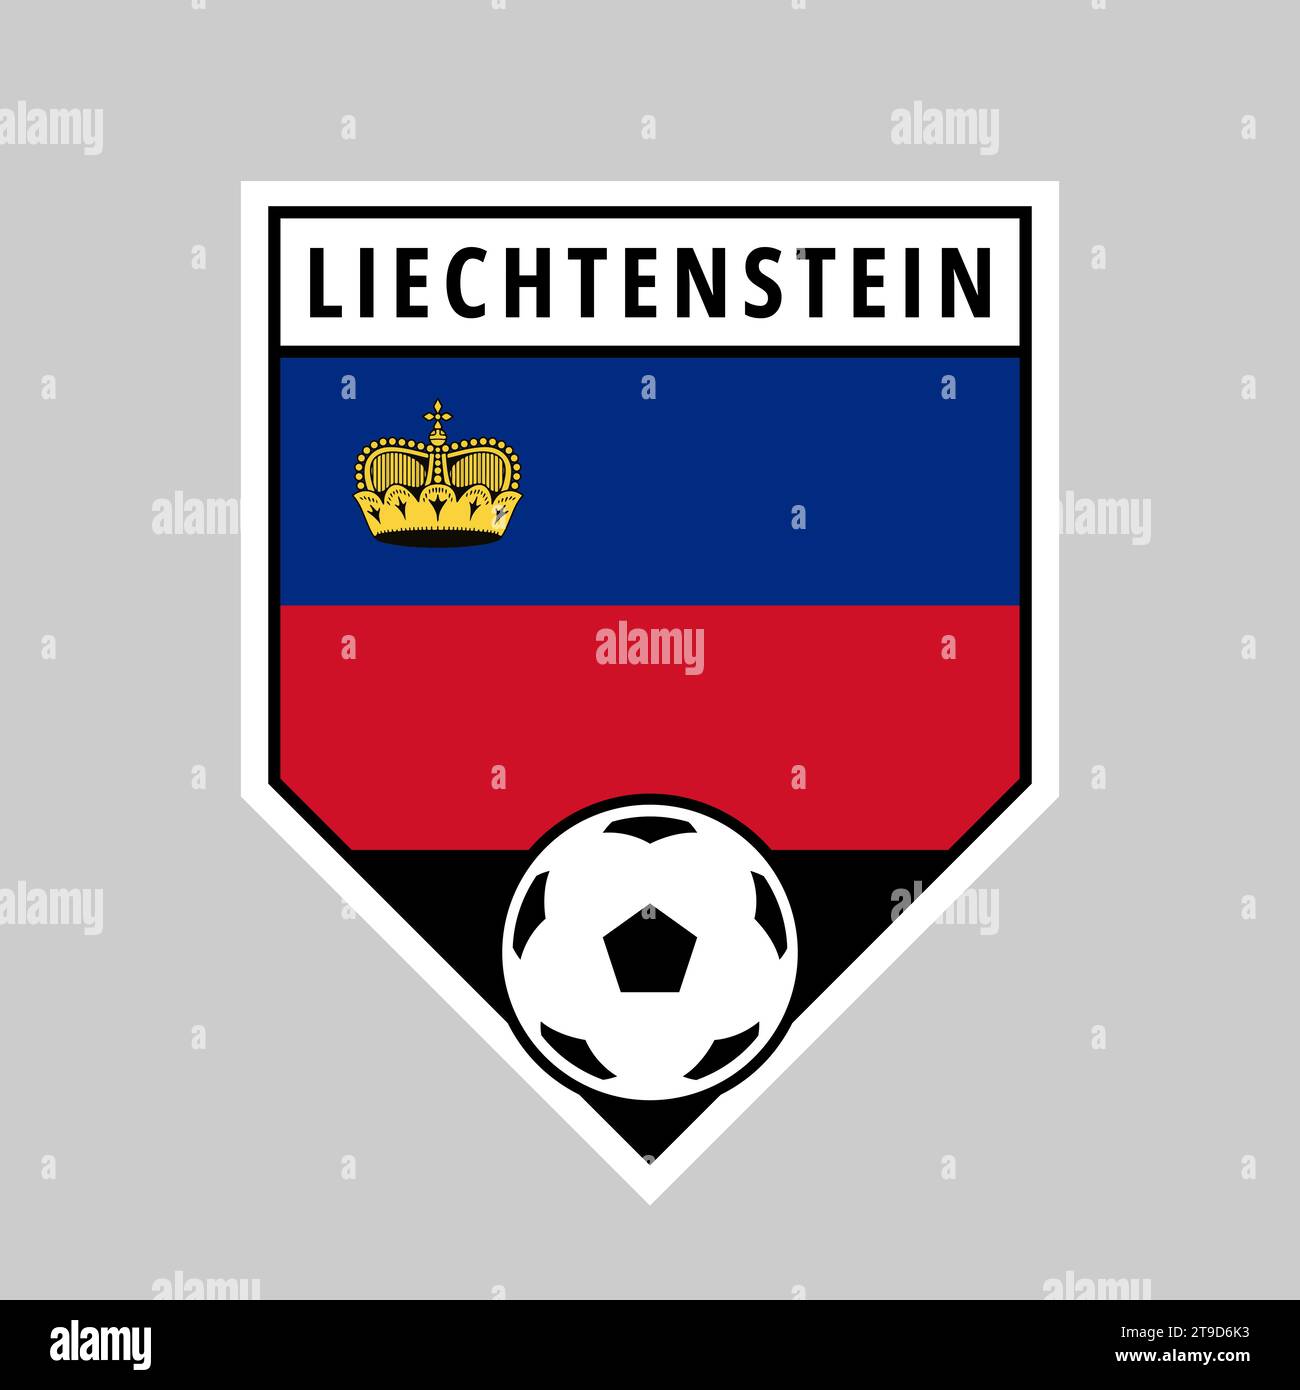 Illustration of Angled Shield Team Badge of Liechtenstein for Football Tournament Stock Vector